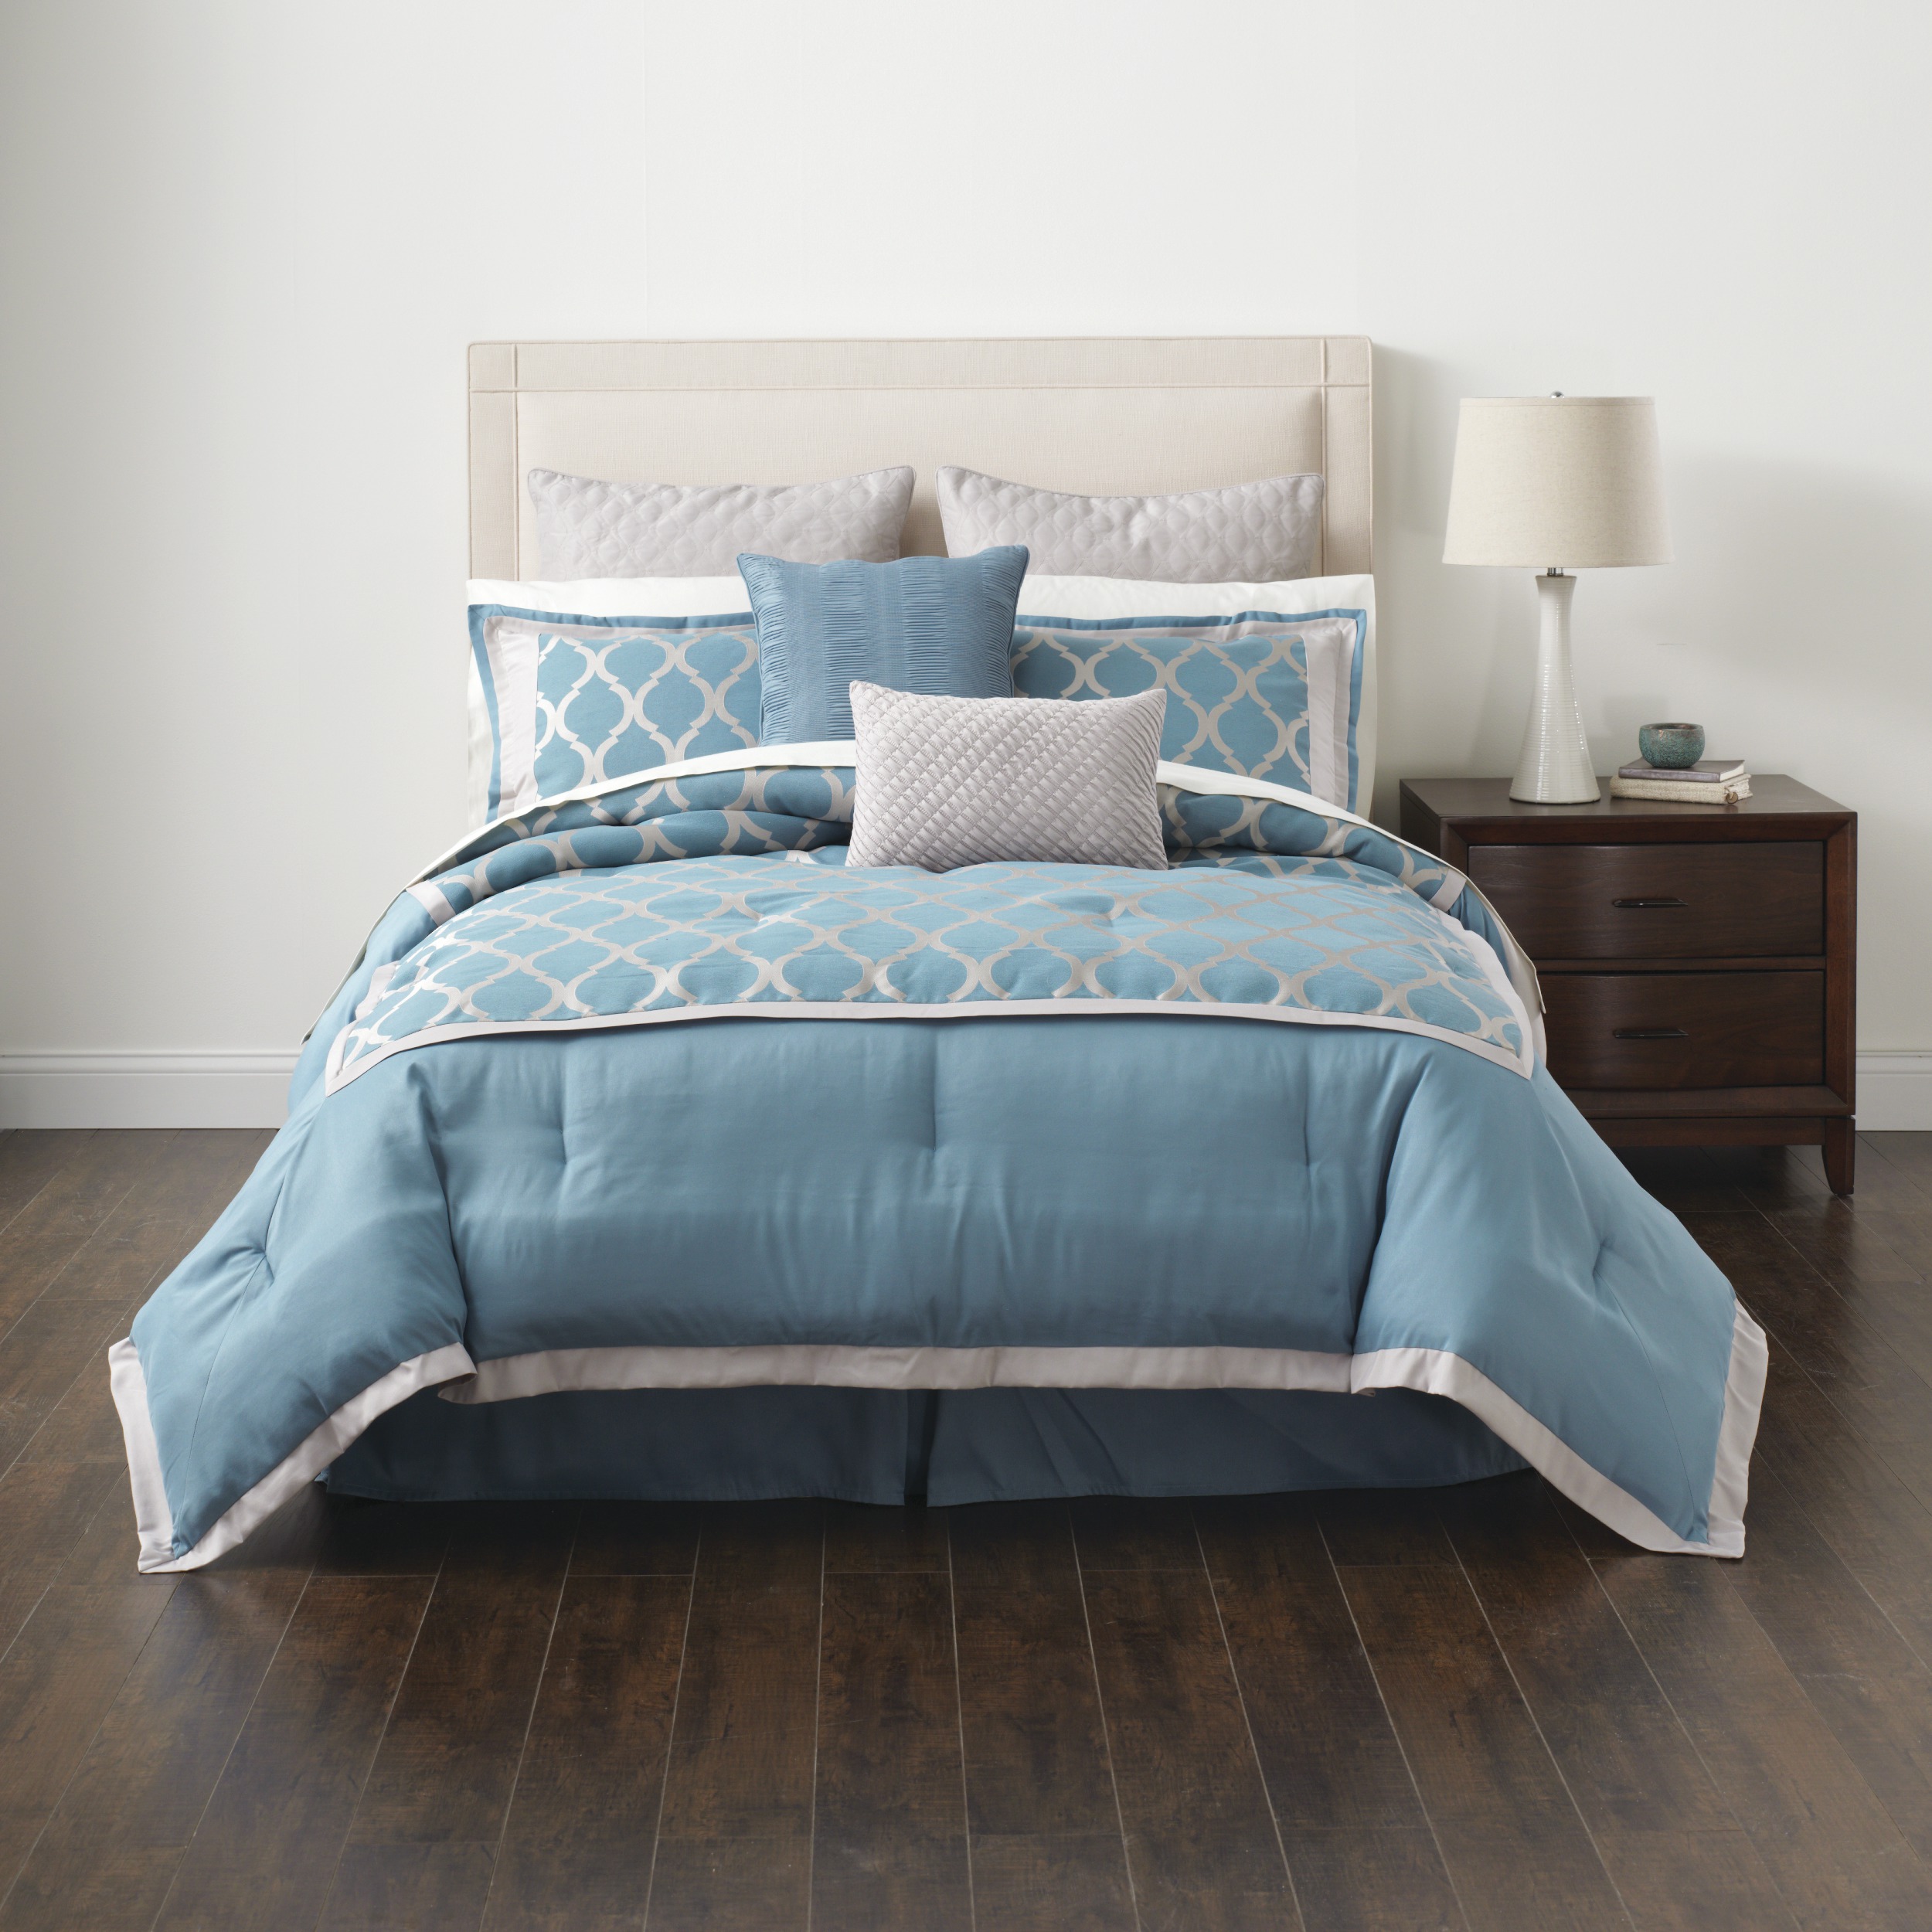 8 Piece Jacquard Frete Comforter Set &#8211; Soft Blue